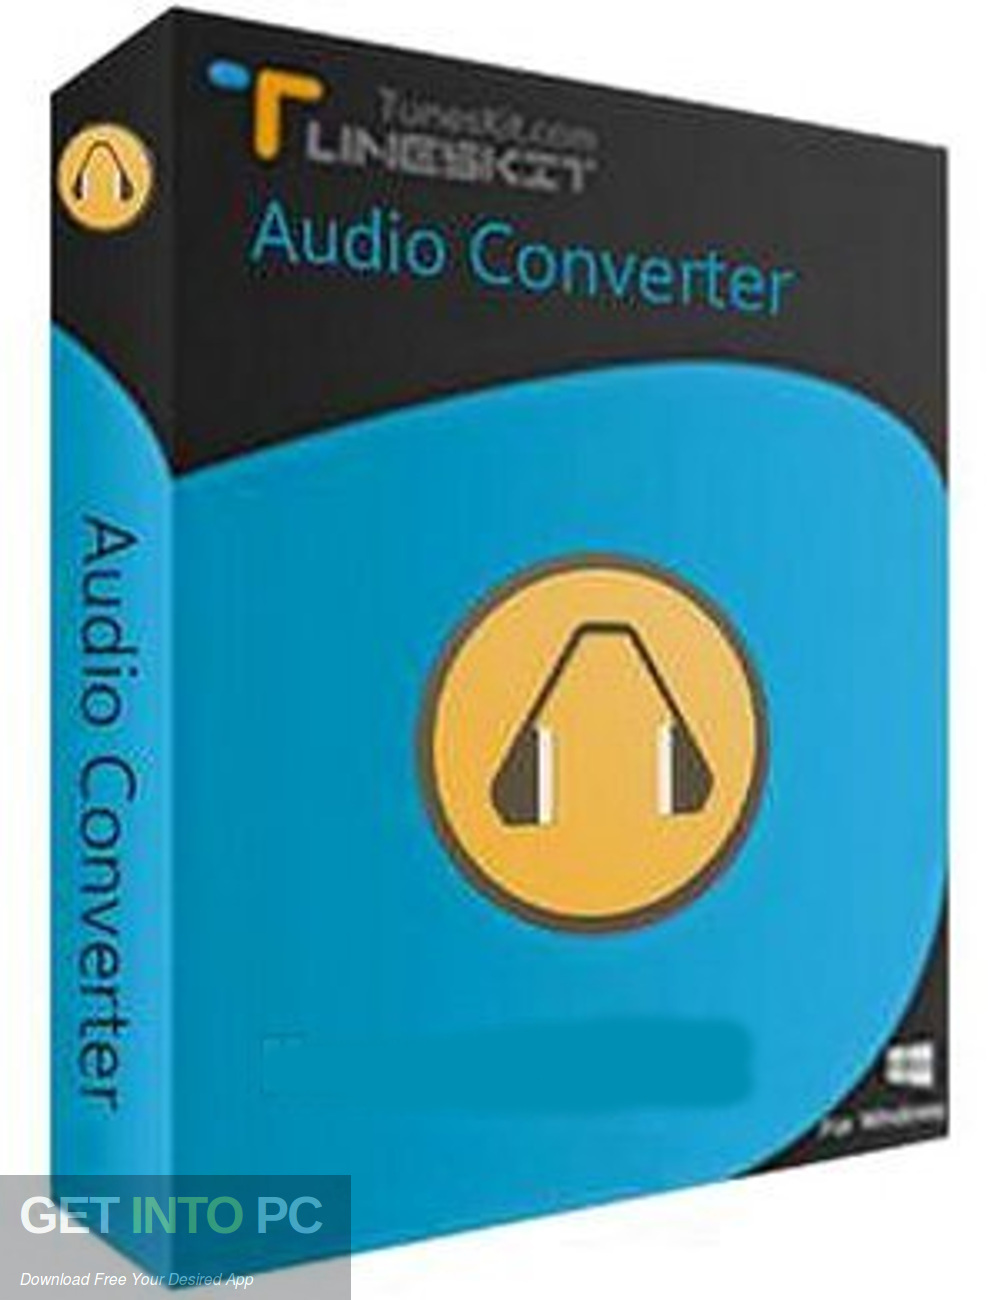 any audio converter crack download